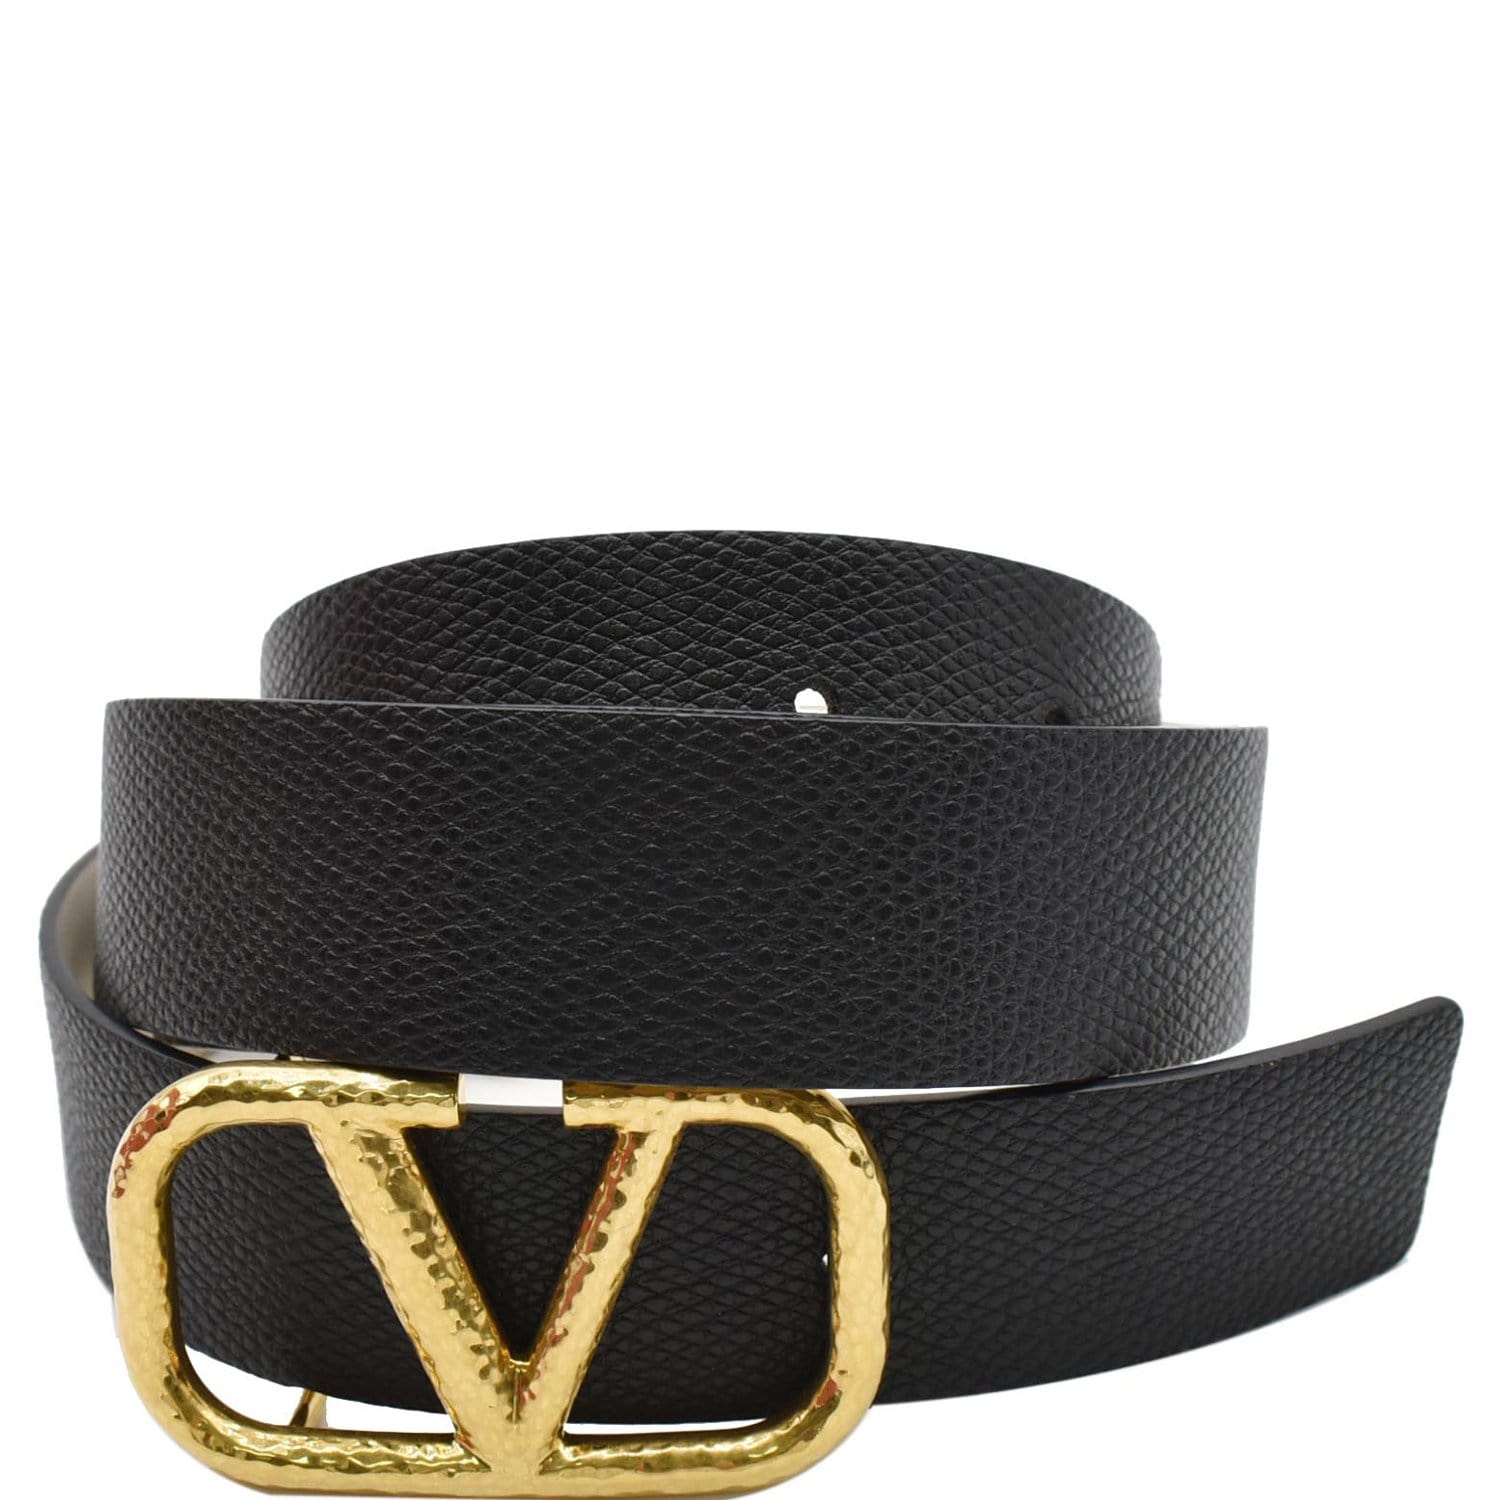 VALENTINO GARAVANI Reversible leather belt VLOGO SIGNATURE in brown/ black